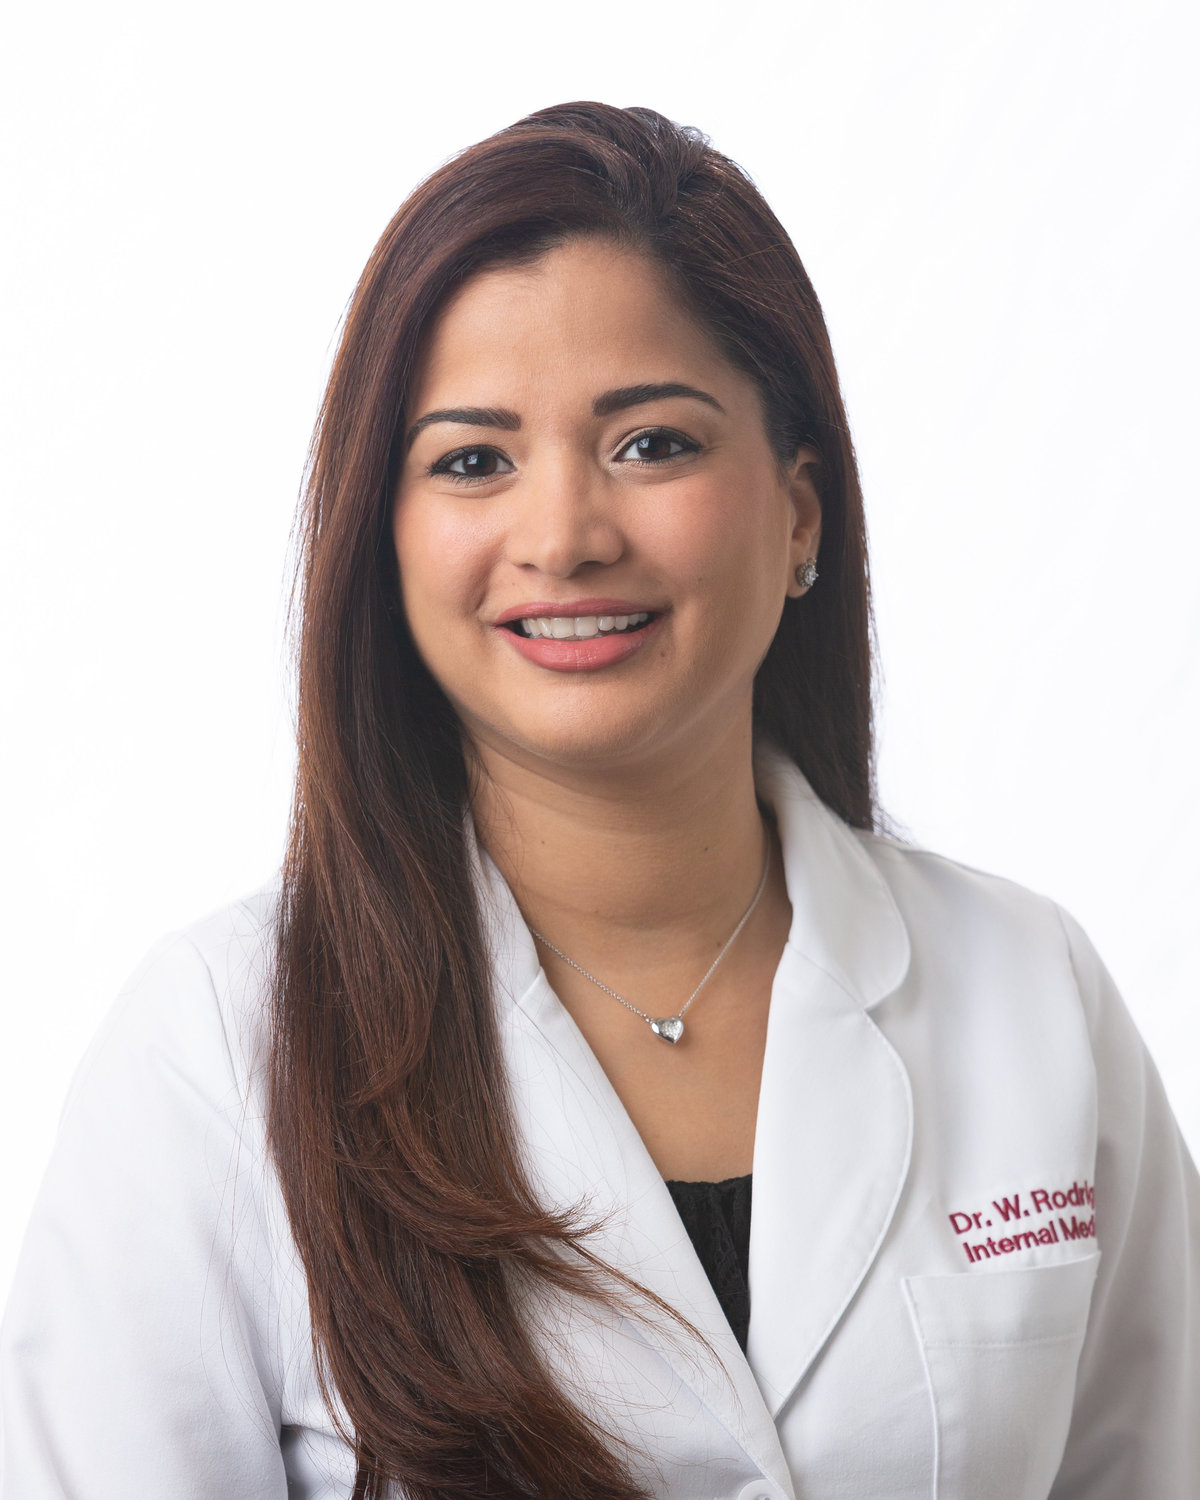 Portrait of Wilsania Rodriguez for her medical practice.